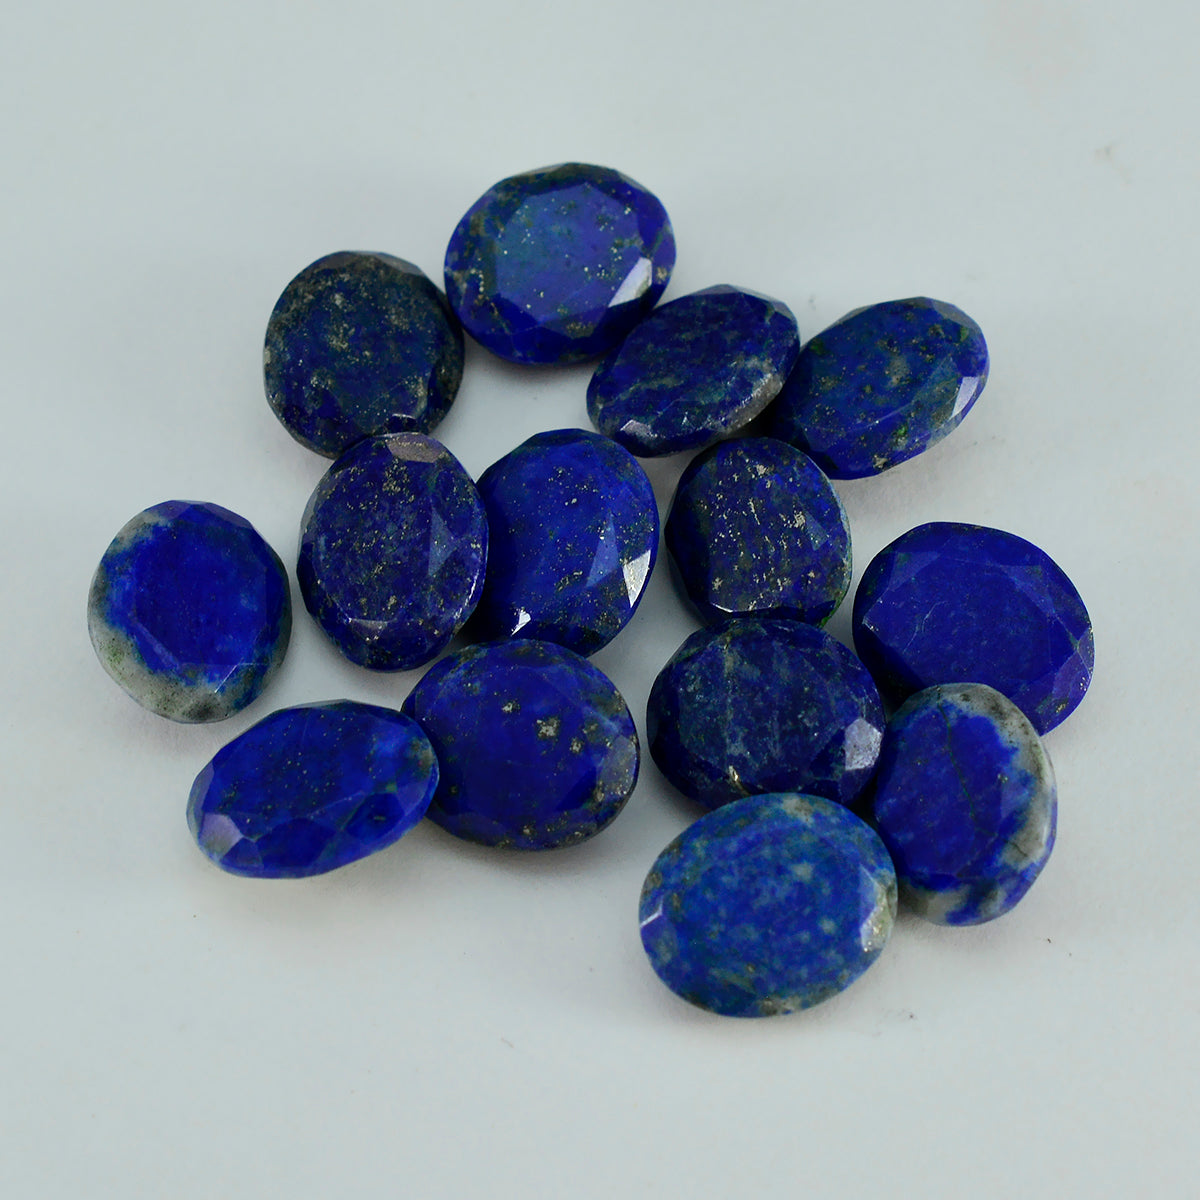 Riyogems 1PC Natural Blue Lapis Lazuli Faceted 10x14 mm Oval Shape lovely Quality Loose Gemstone